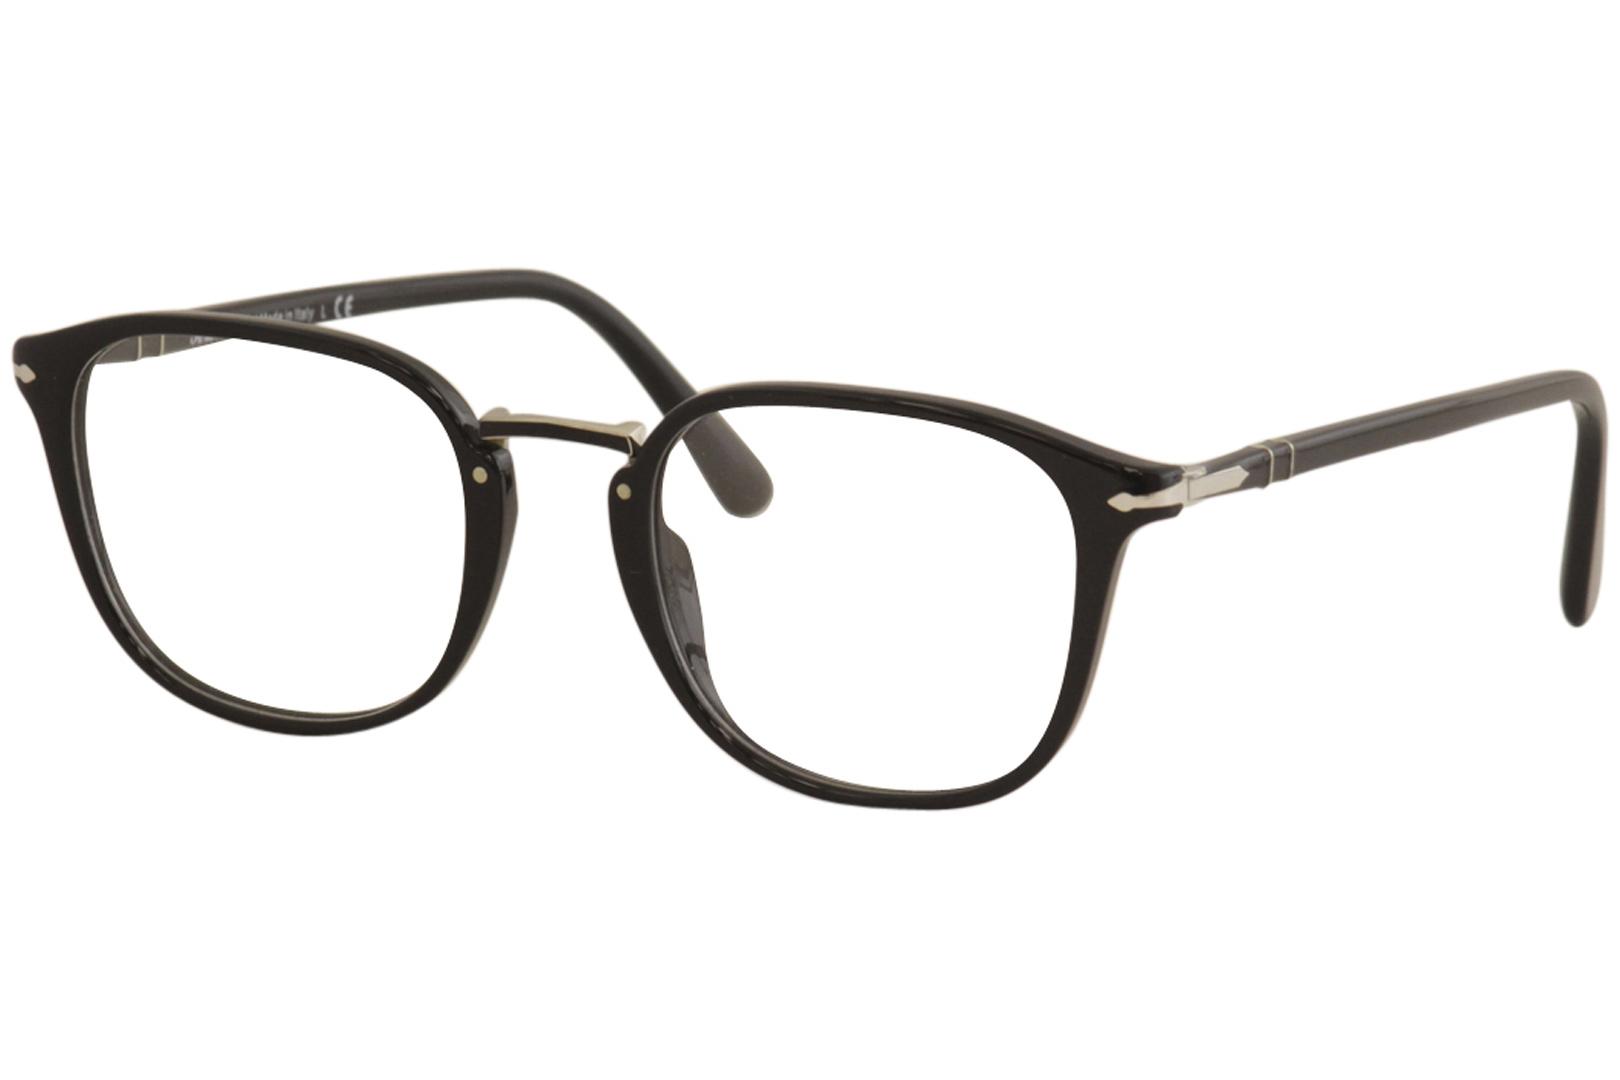 Persol Men's Eyeglass Frames 